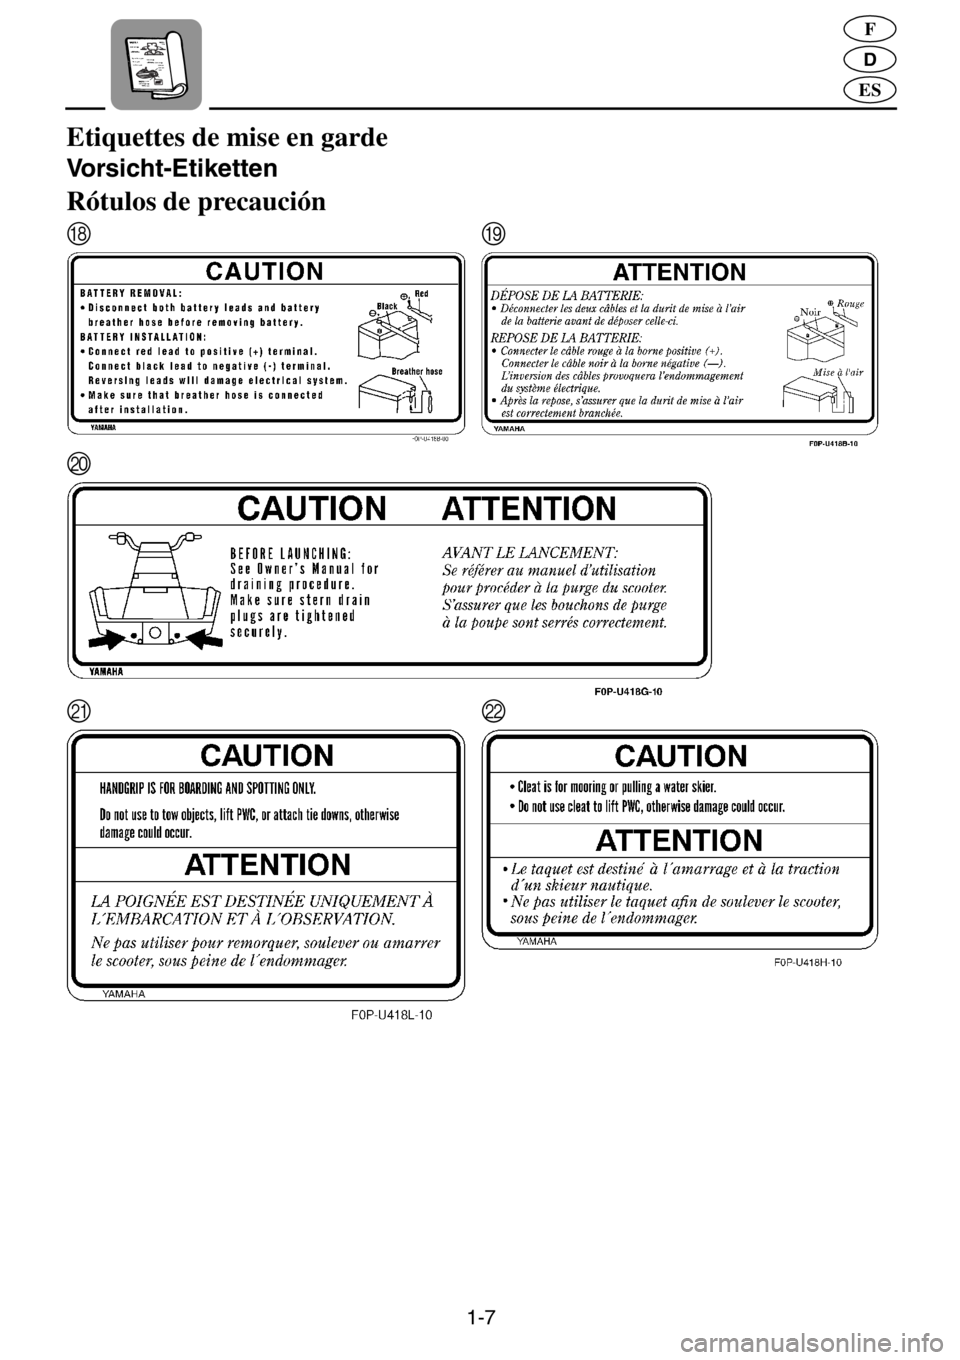 YAMAHA XL 1200 2001  Manuale de Empleo (in Spanish) 1-7
D
F
ES
Etiquettes de mise en garde 
Vorsicht-Etiketten 
Rótulos de precaución 
HI
J
KL 